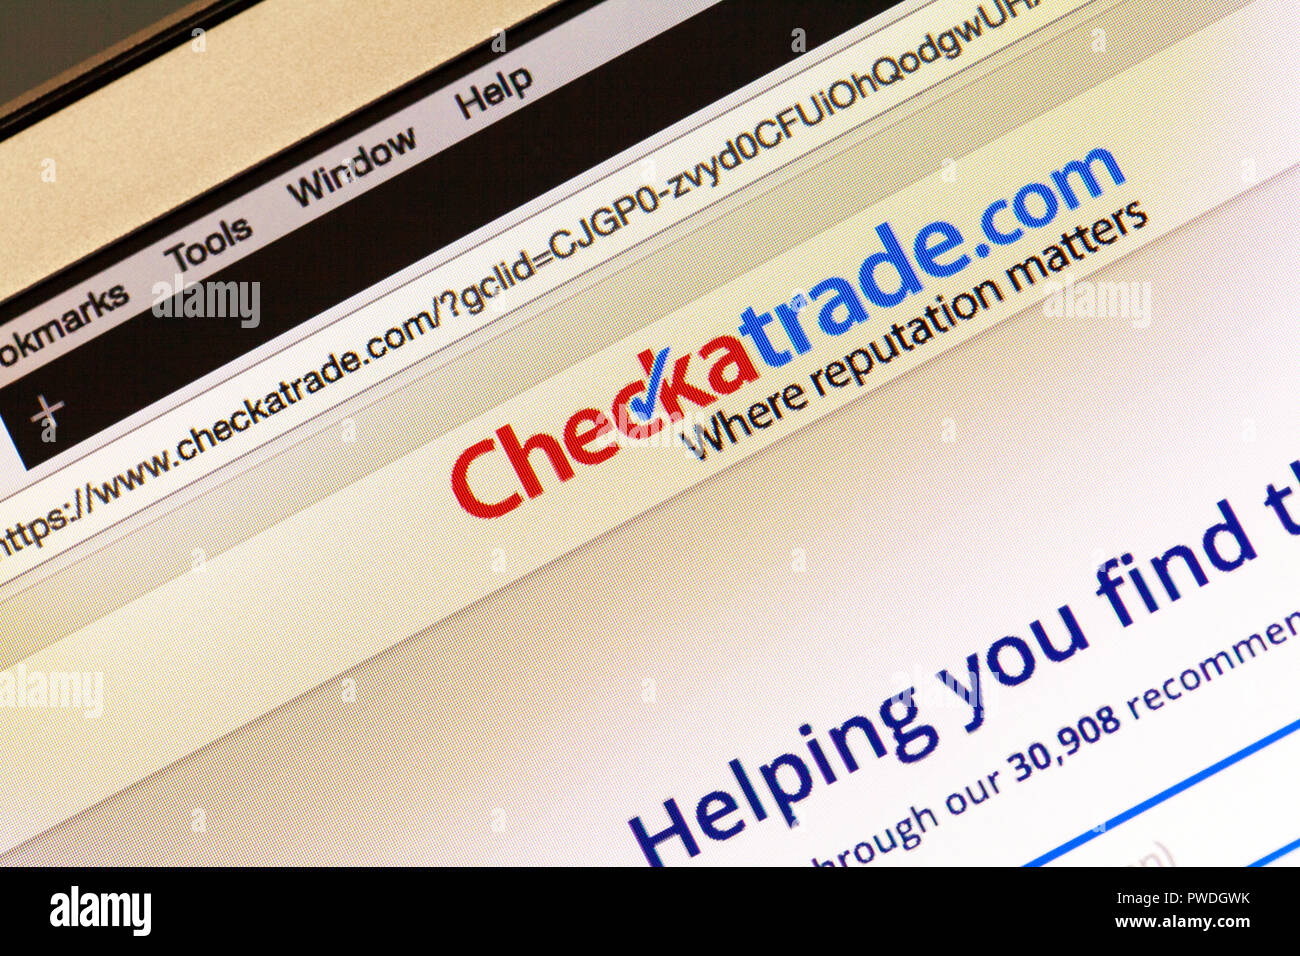 Checkatrade.com website Handwerker zu finden, finden Sie einen Handwerker, Checkatrade website, Checkatrade.com, Checkatrade.com Checkatrade.com homepage, Logo, Stockfoto